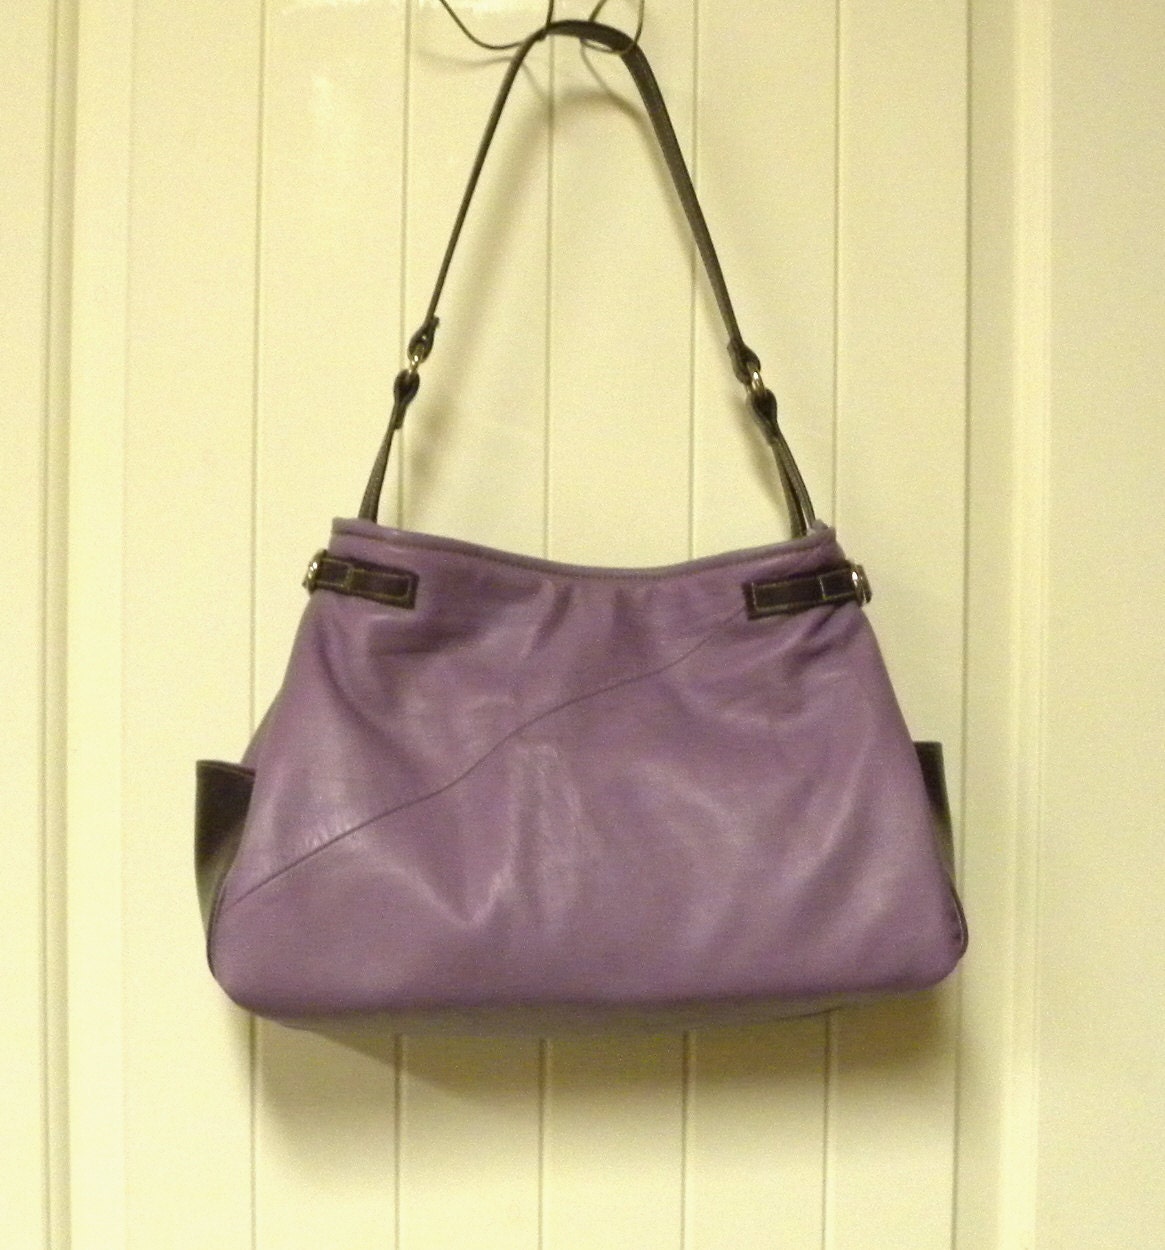 Handmade from a Lilac Leather Skirt Handbag Tote Bag